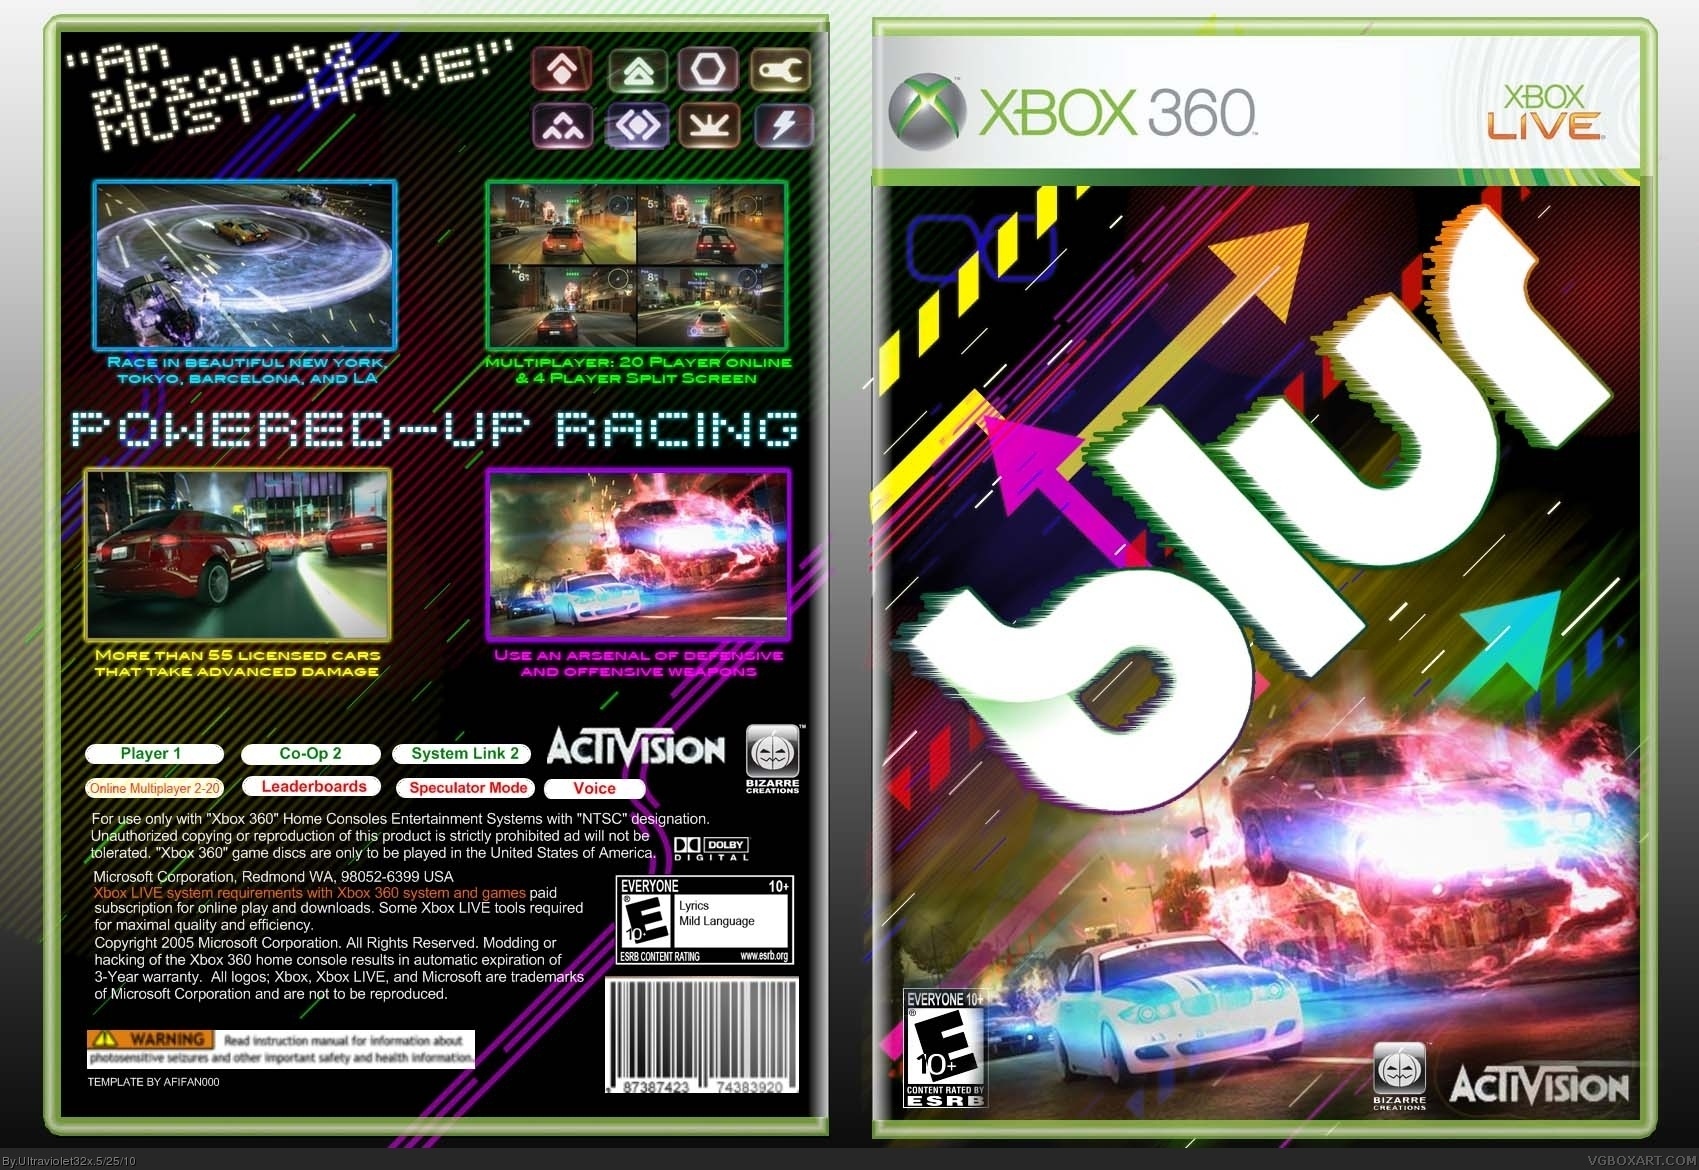 Blur - Xbox 360